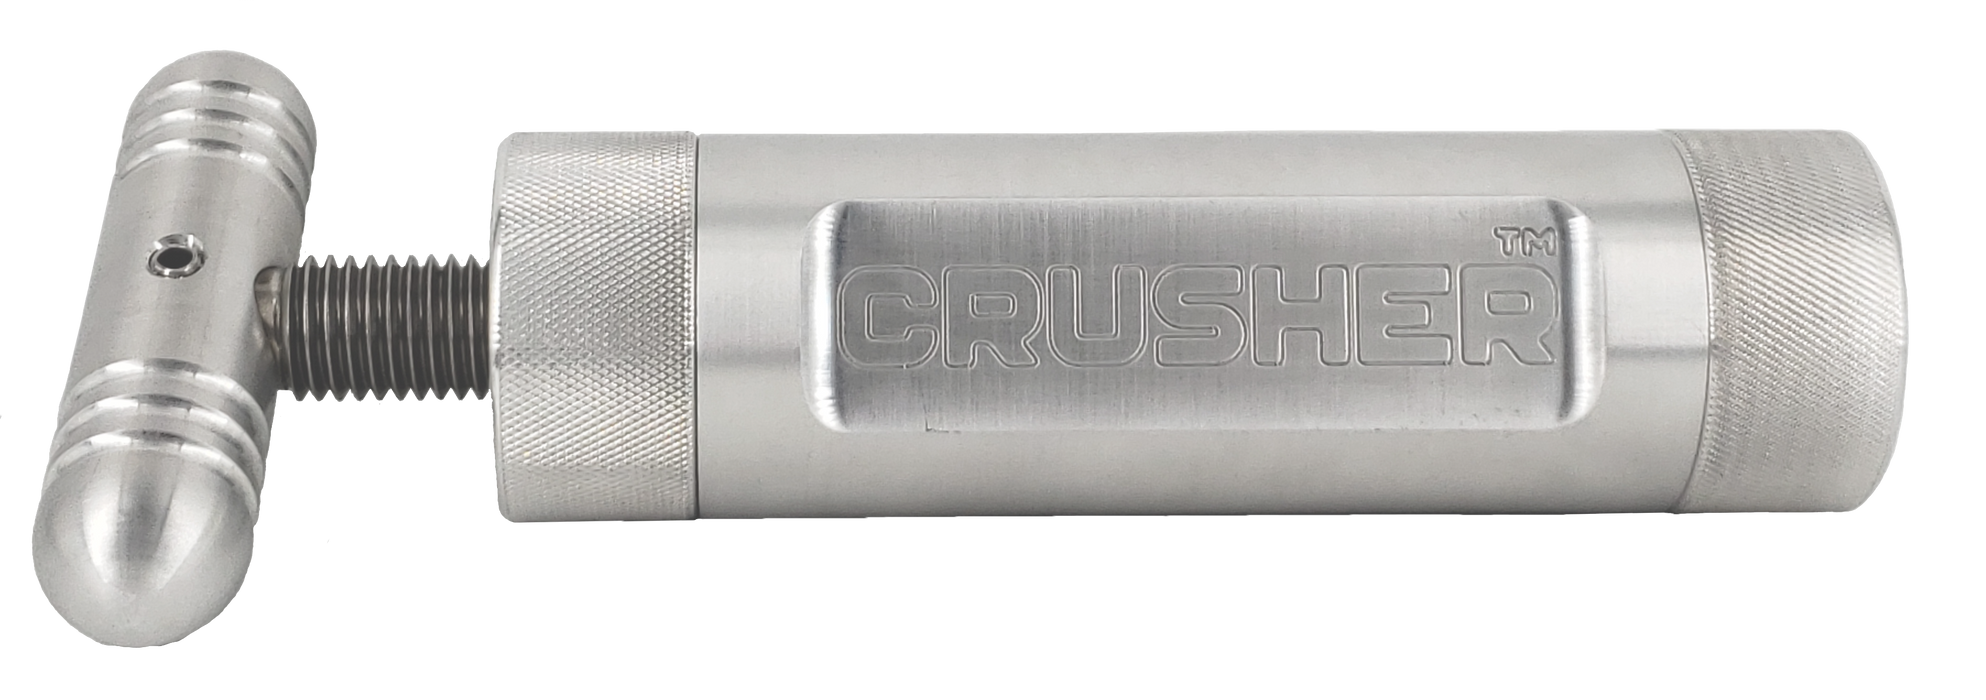 The Crusher - World's toughest Hand Press! NEW